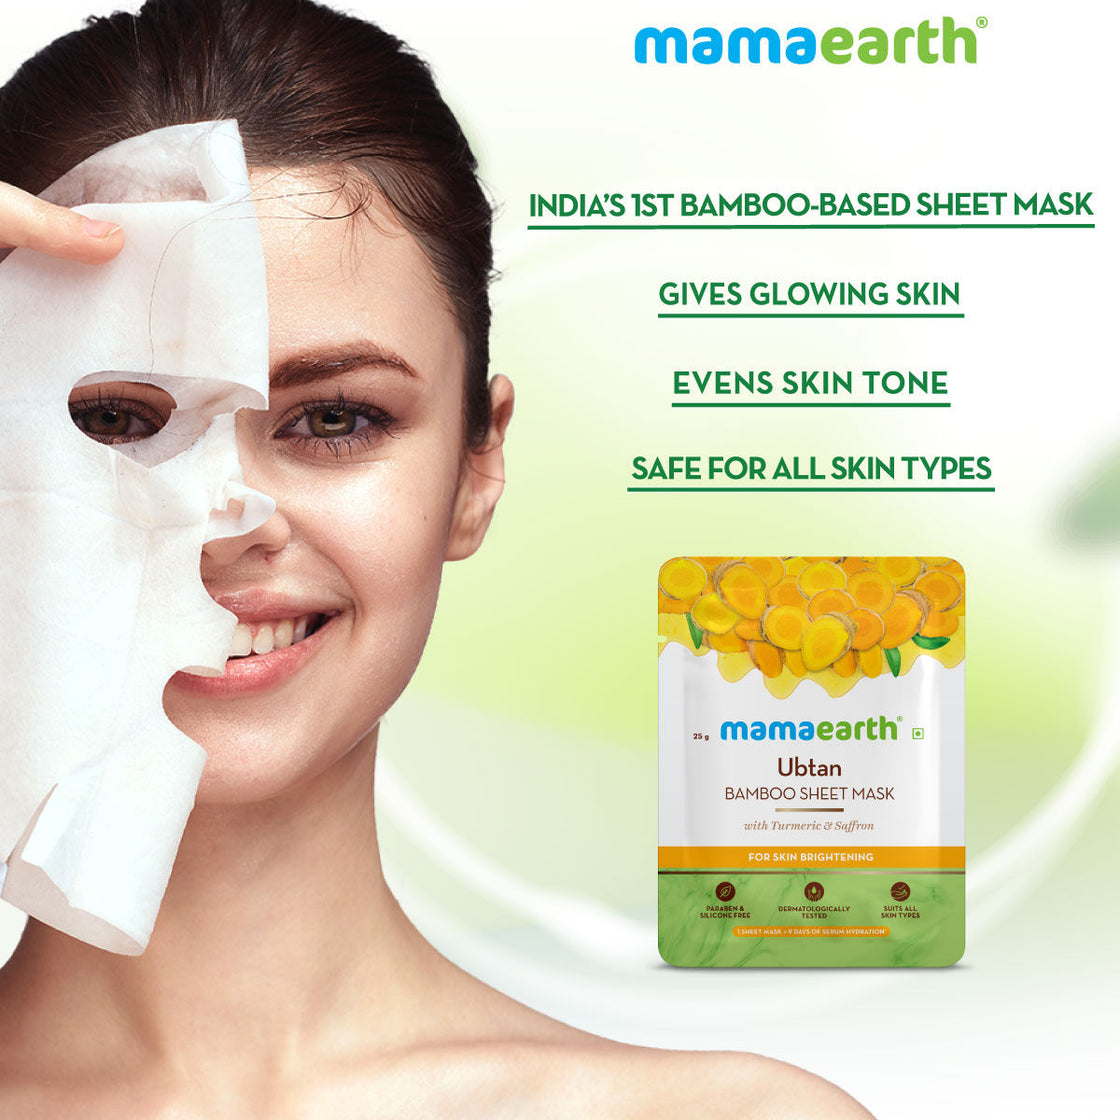 Mamaearth Ubtan Bamboo Sheet Mask With Turmeric & Saffron For Skin Brightening - 25 G-3